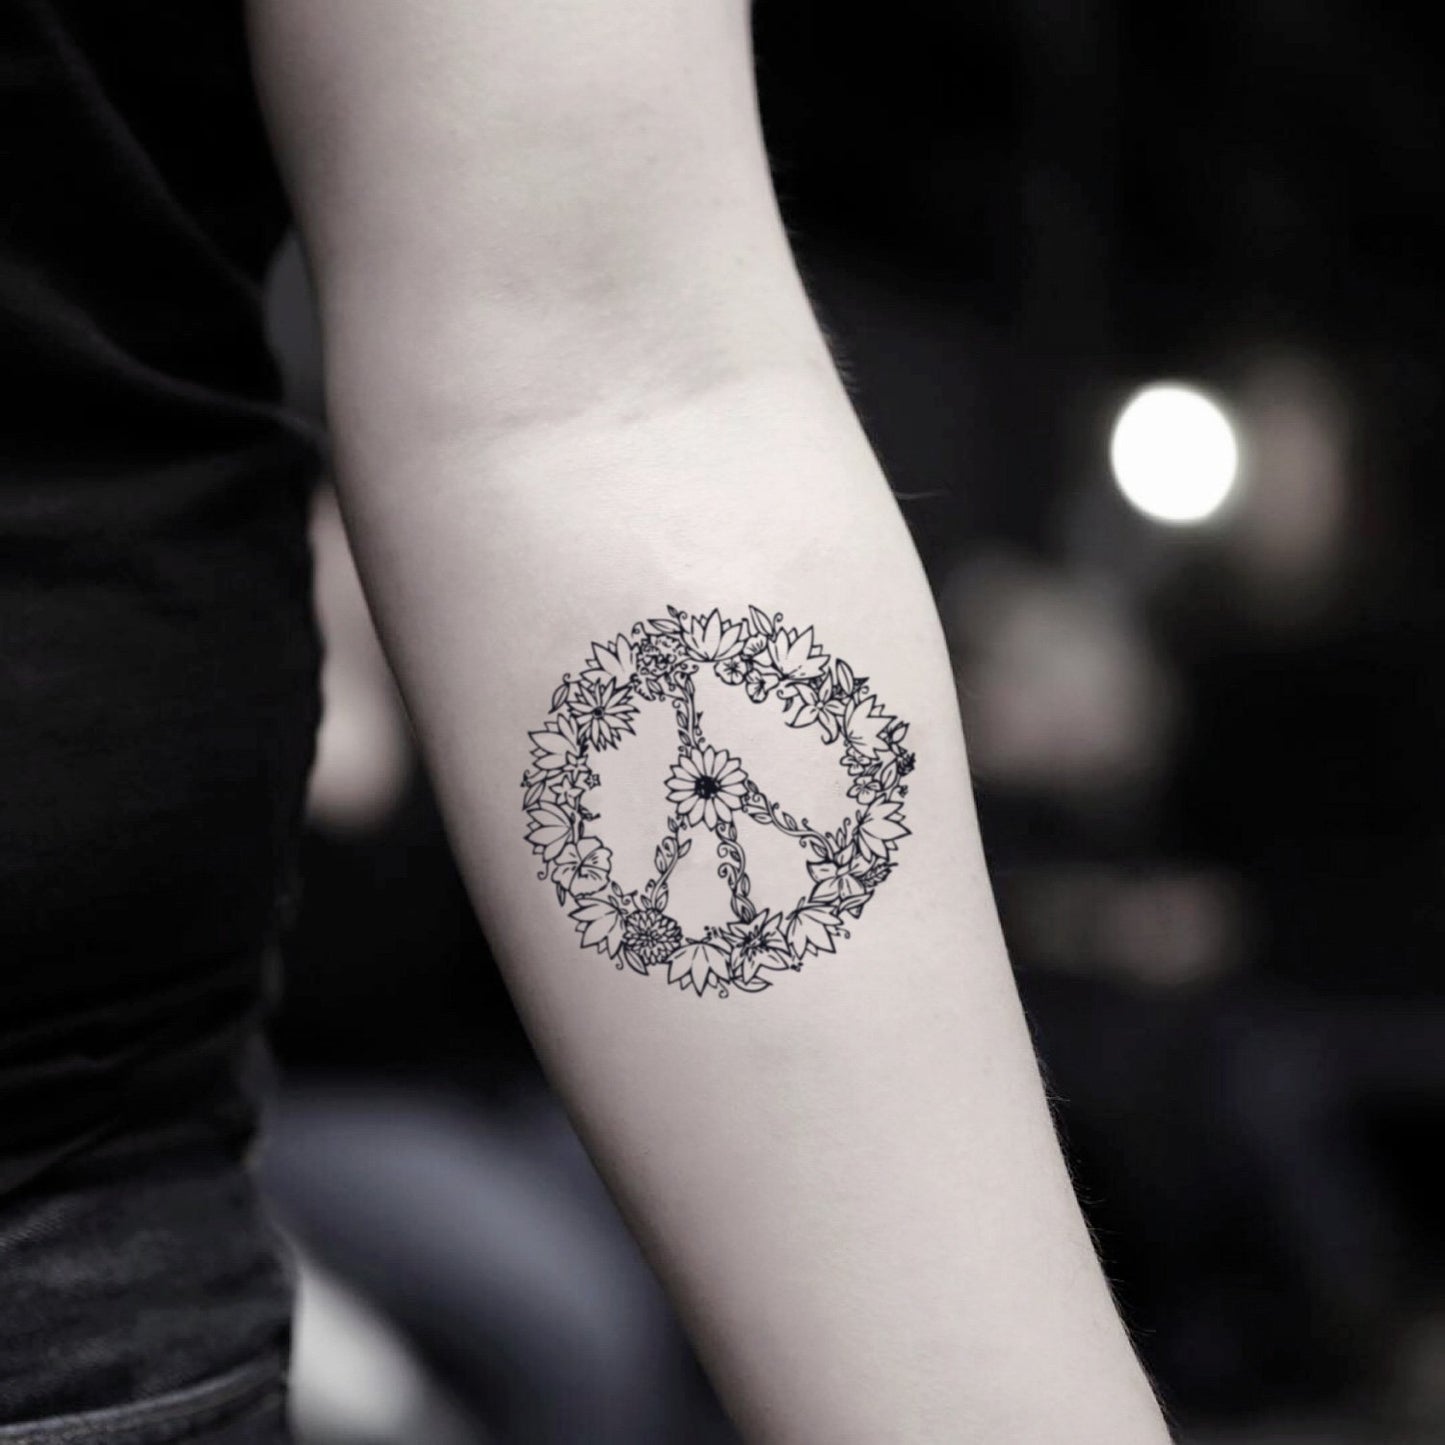 fake small peace symbol sign flower illustrative temporary tattoo sticker design idea on inner arm